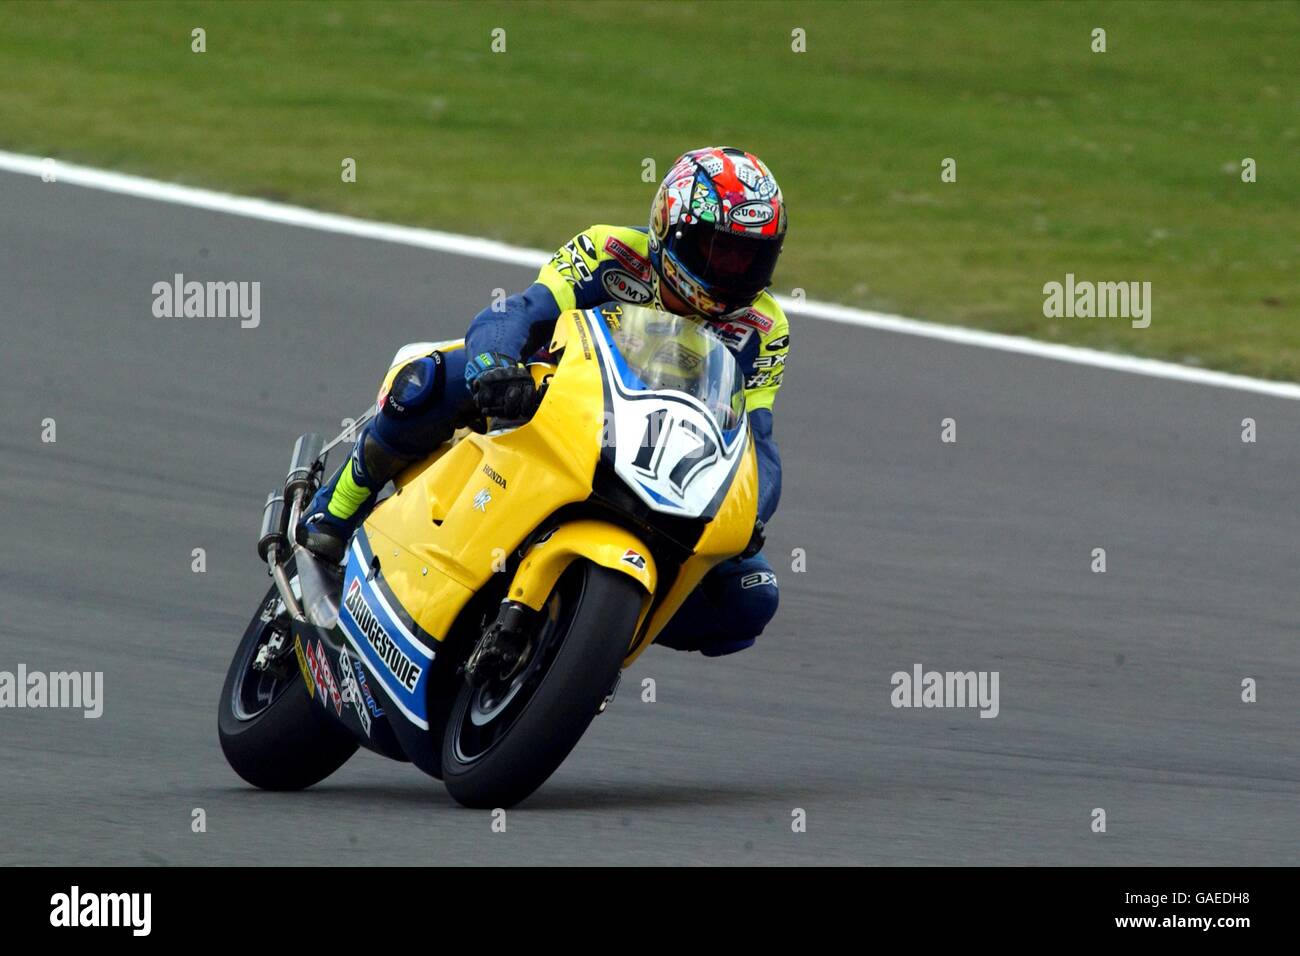 Motorcycling - British Superbikes - British Grand Prix. Jurgen Vd Goorbergh during qualifying for the Moto GP race Stock Photo